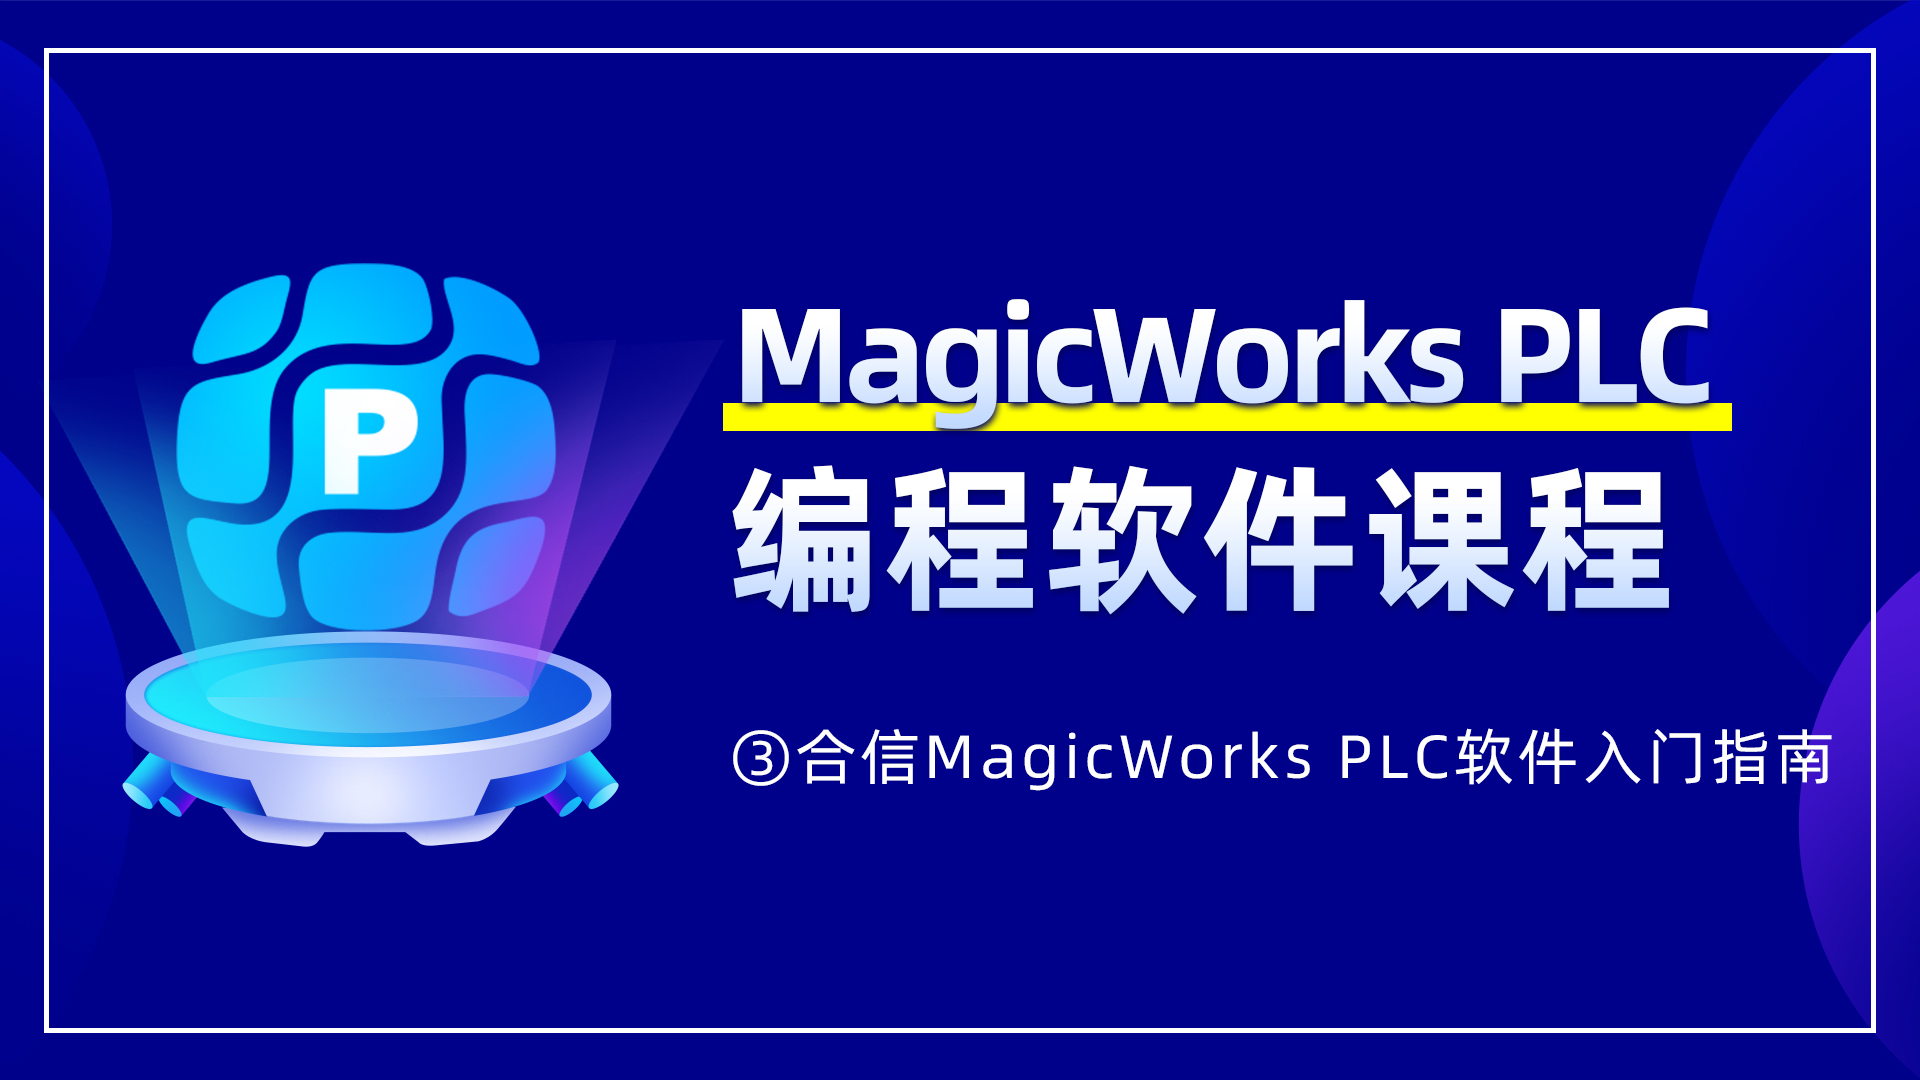 3. 合信MagicWorks PLC软件入门指南